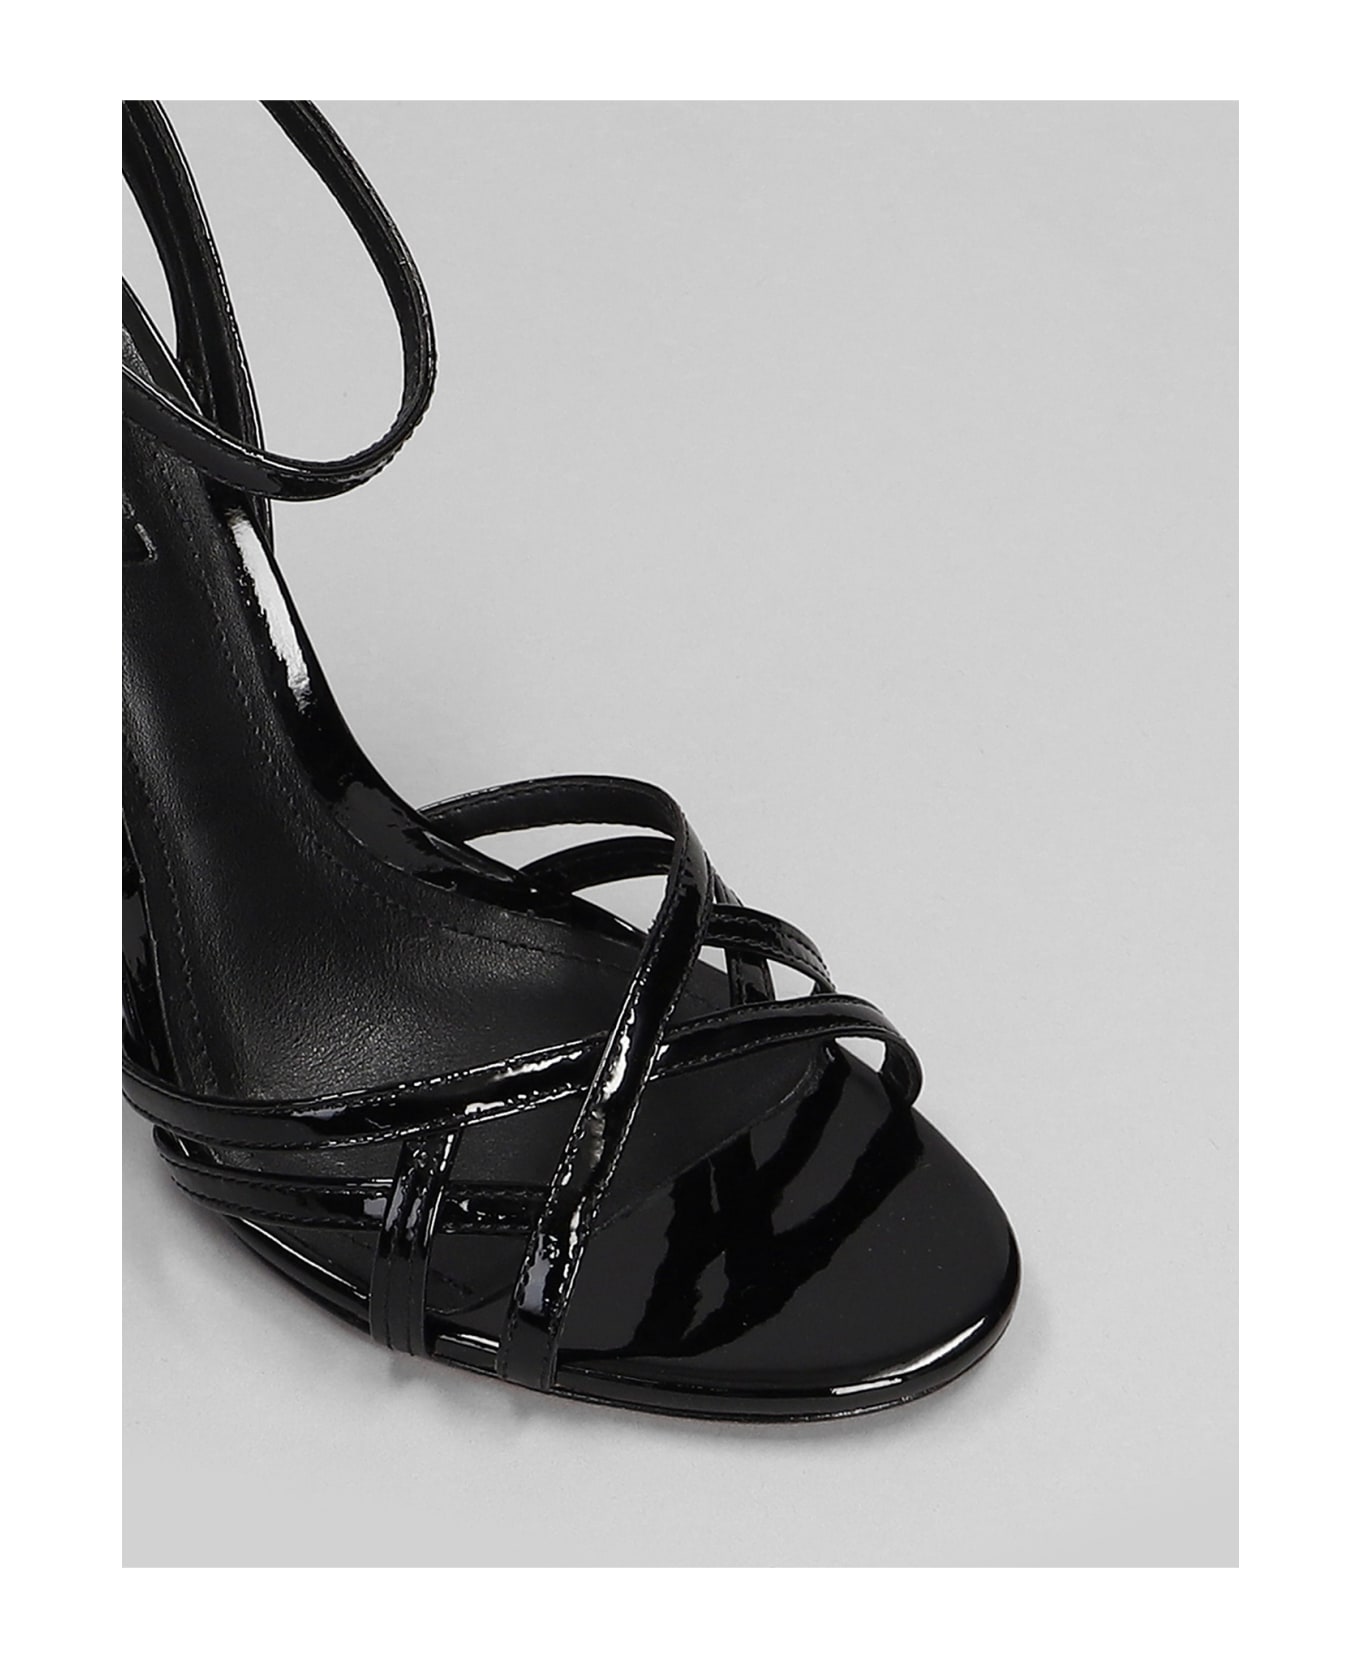 Schutz Sandals In Black Patent Leather - black